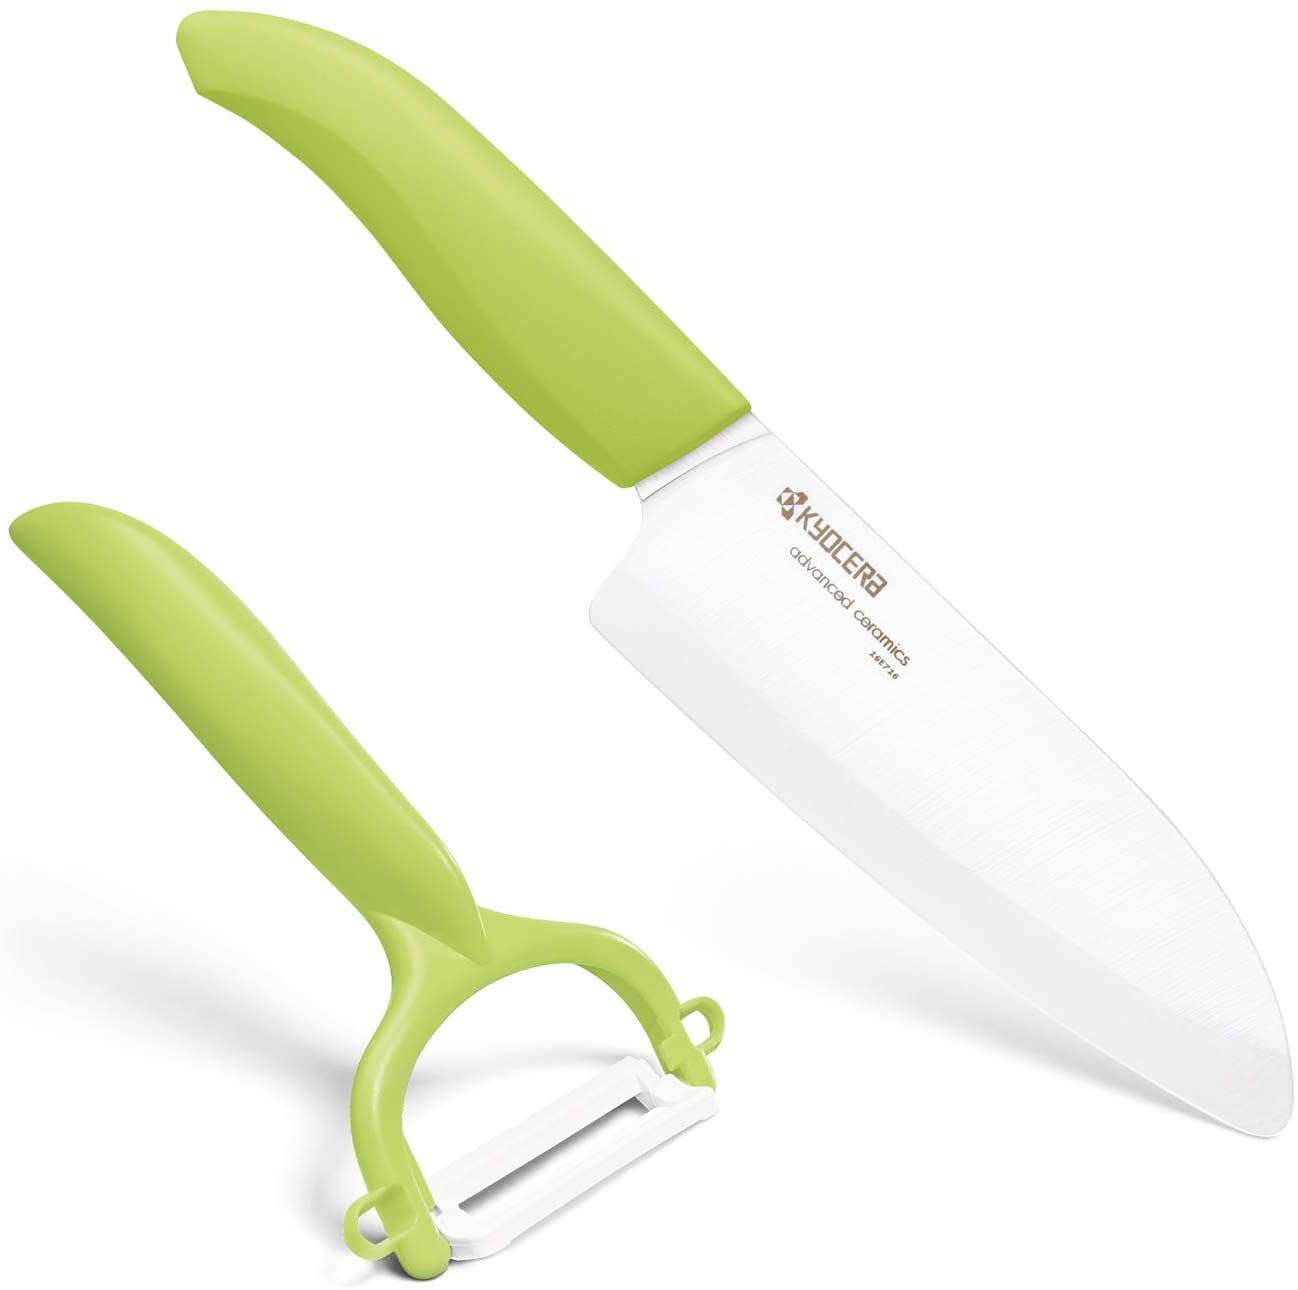 Kyocera Revolution Ceramic Knife and Peeler, 1 EA, Green